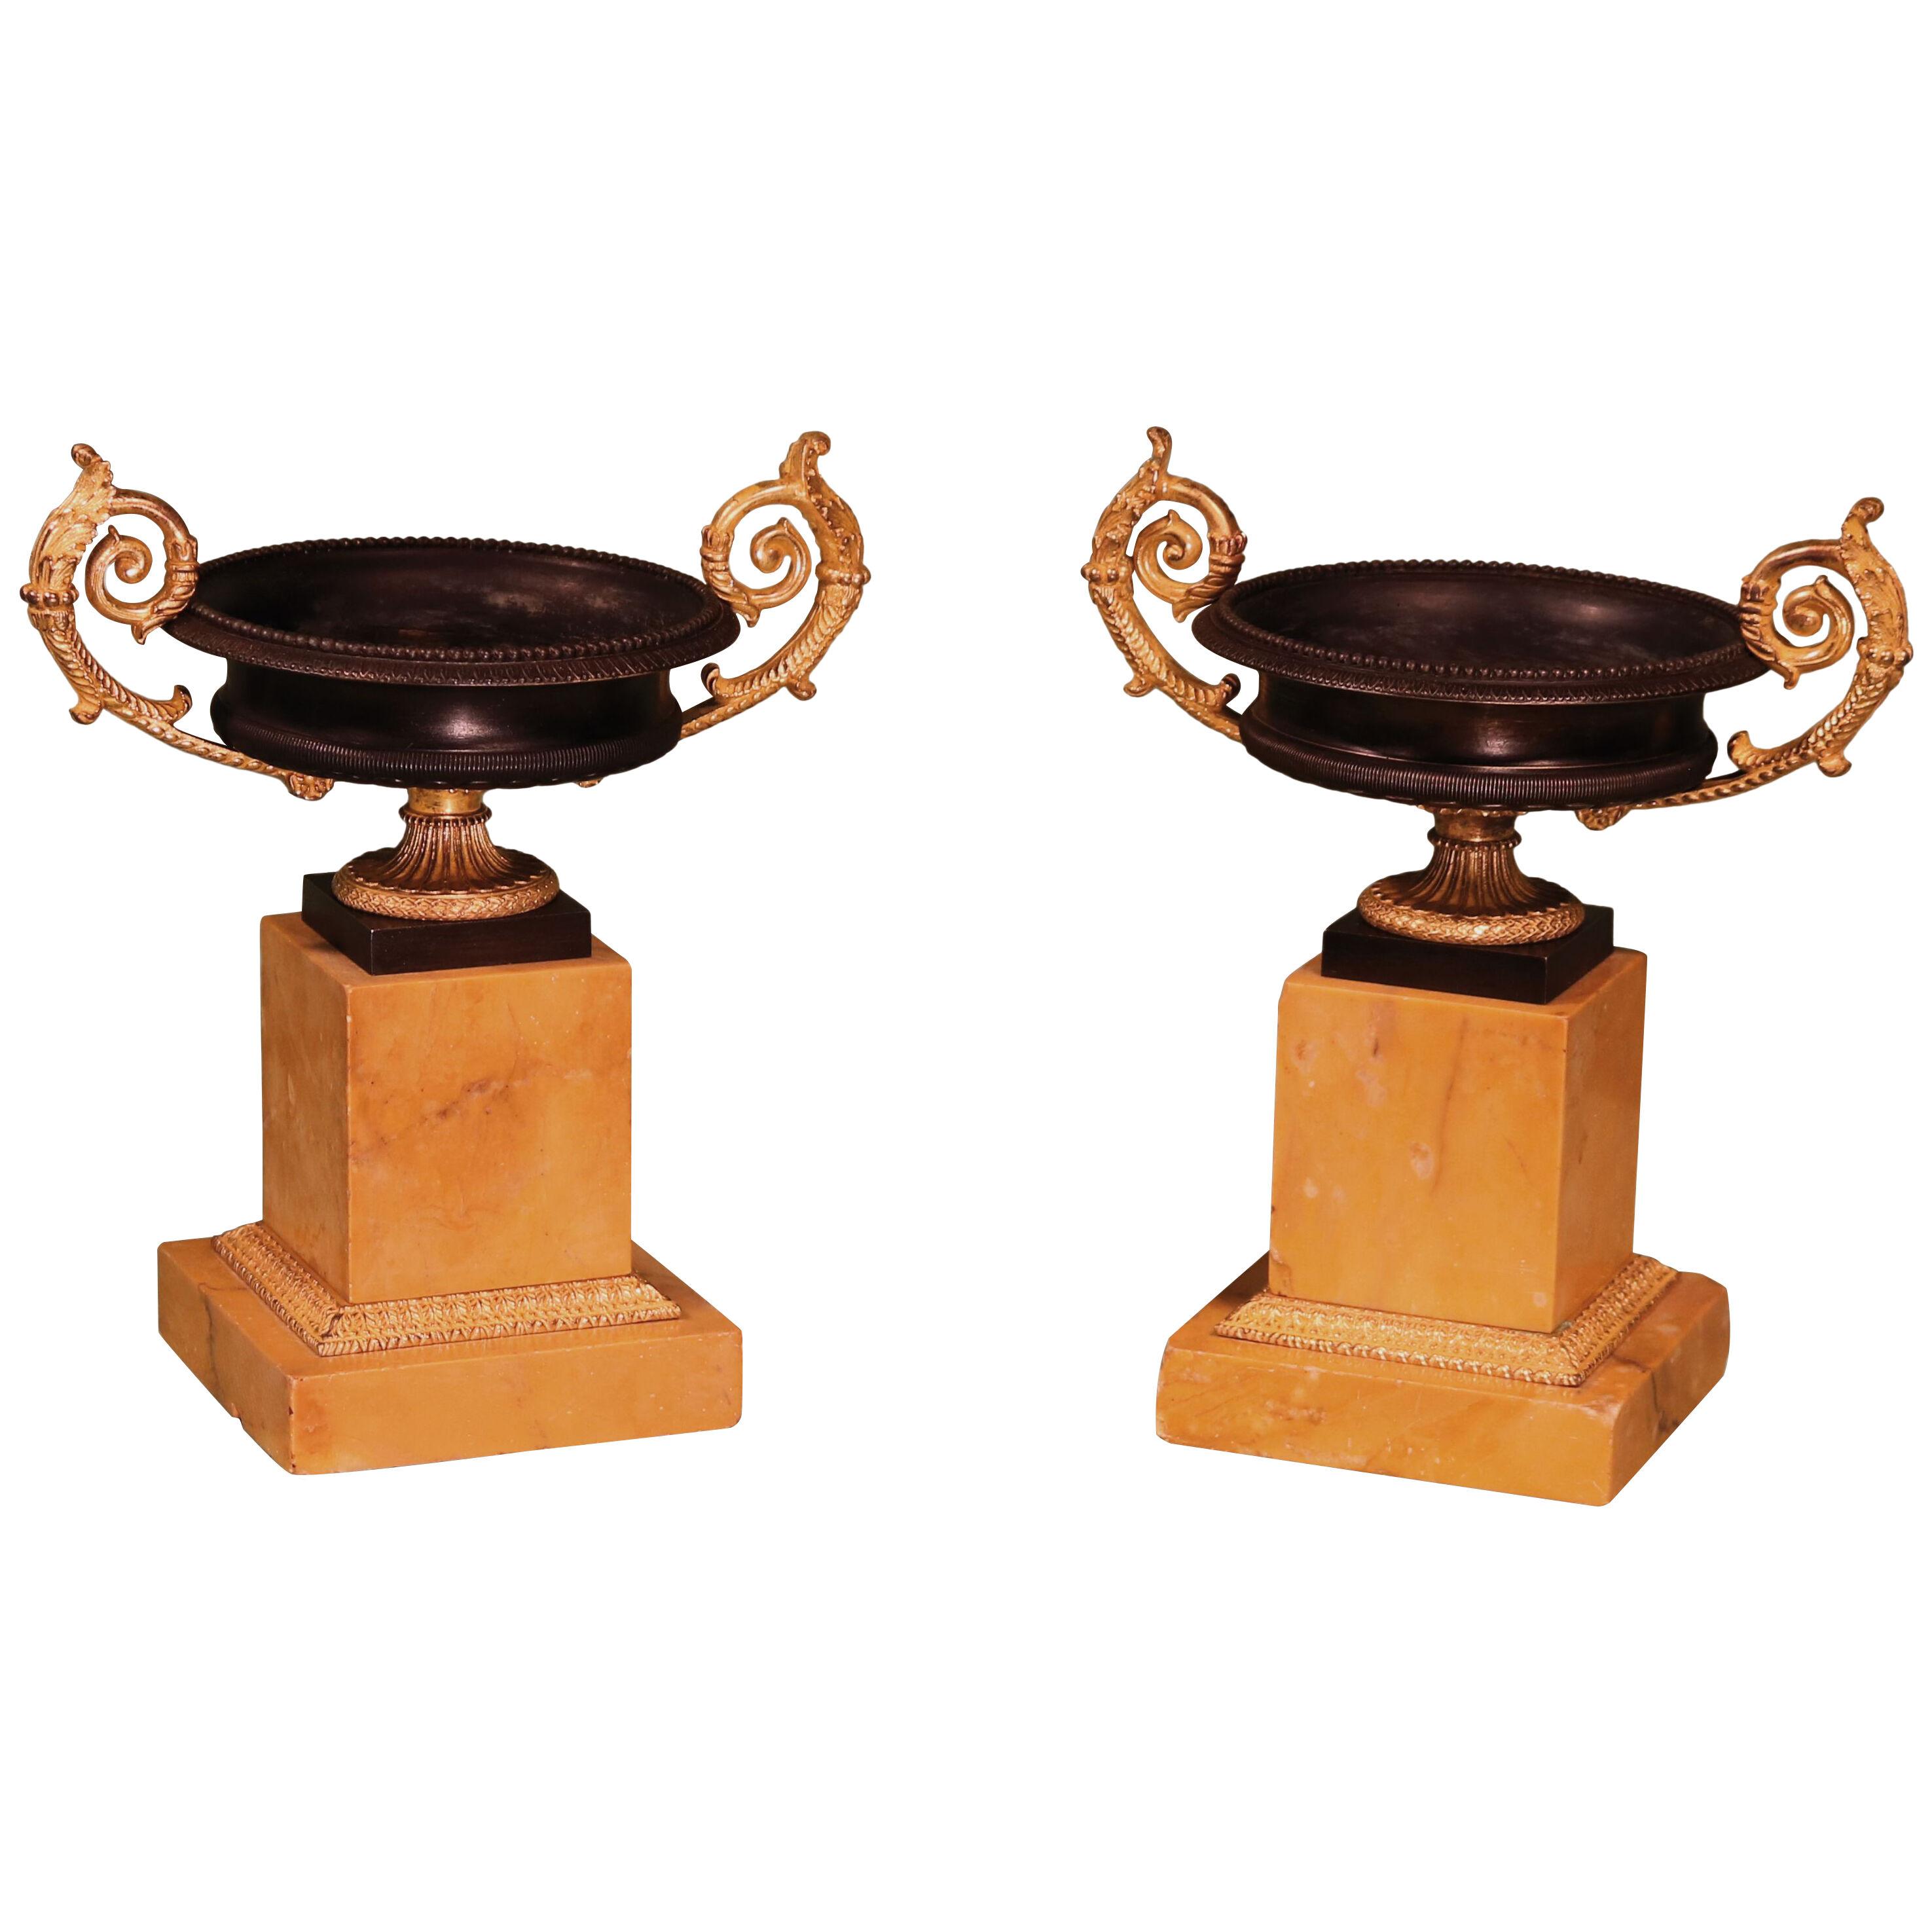 A pair of Regency period bronze and ormolu tazzas